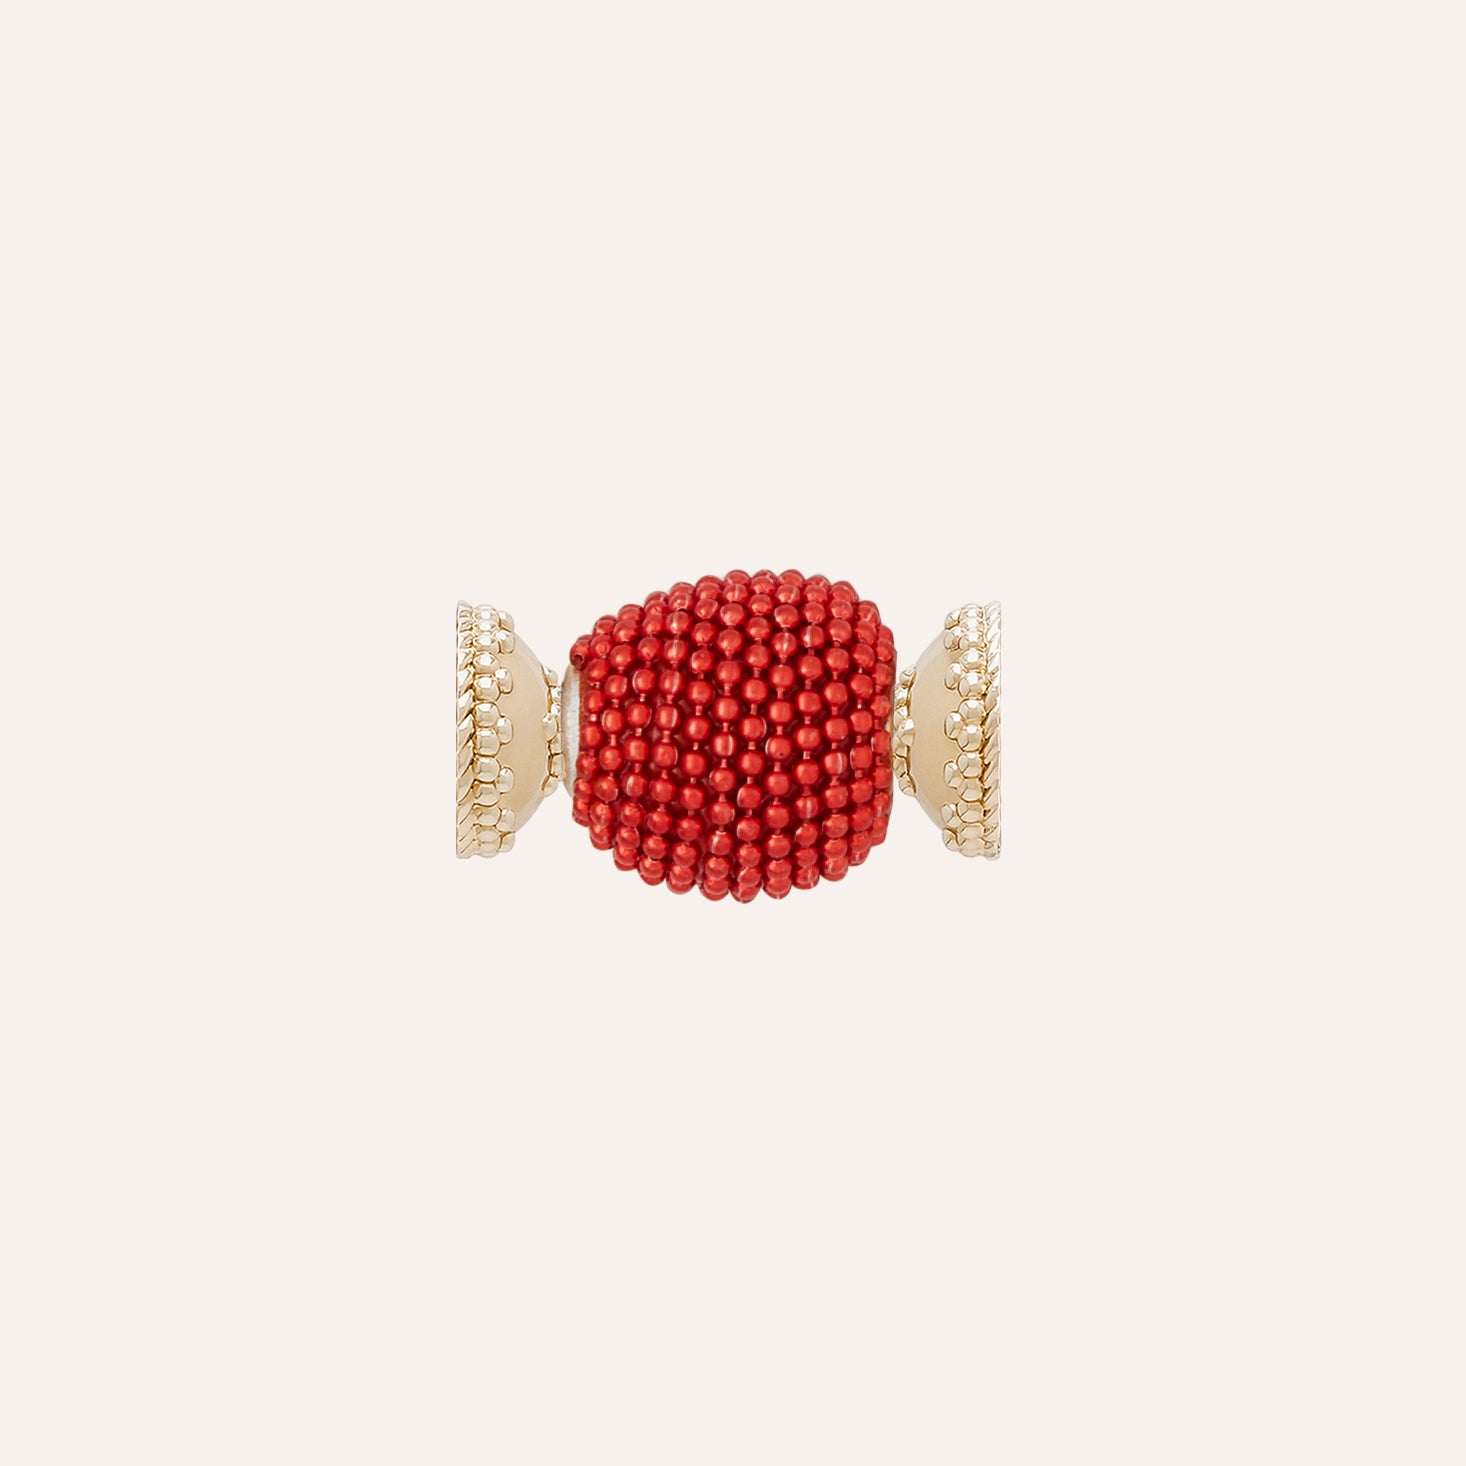 Caviar Red Bead 18mm Centerpiece